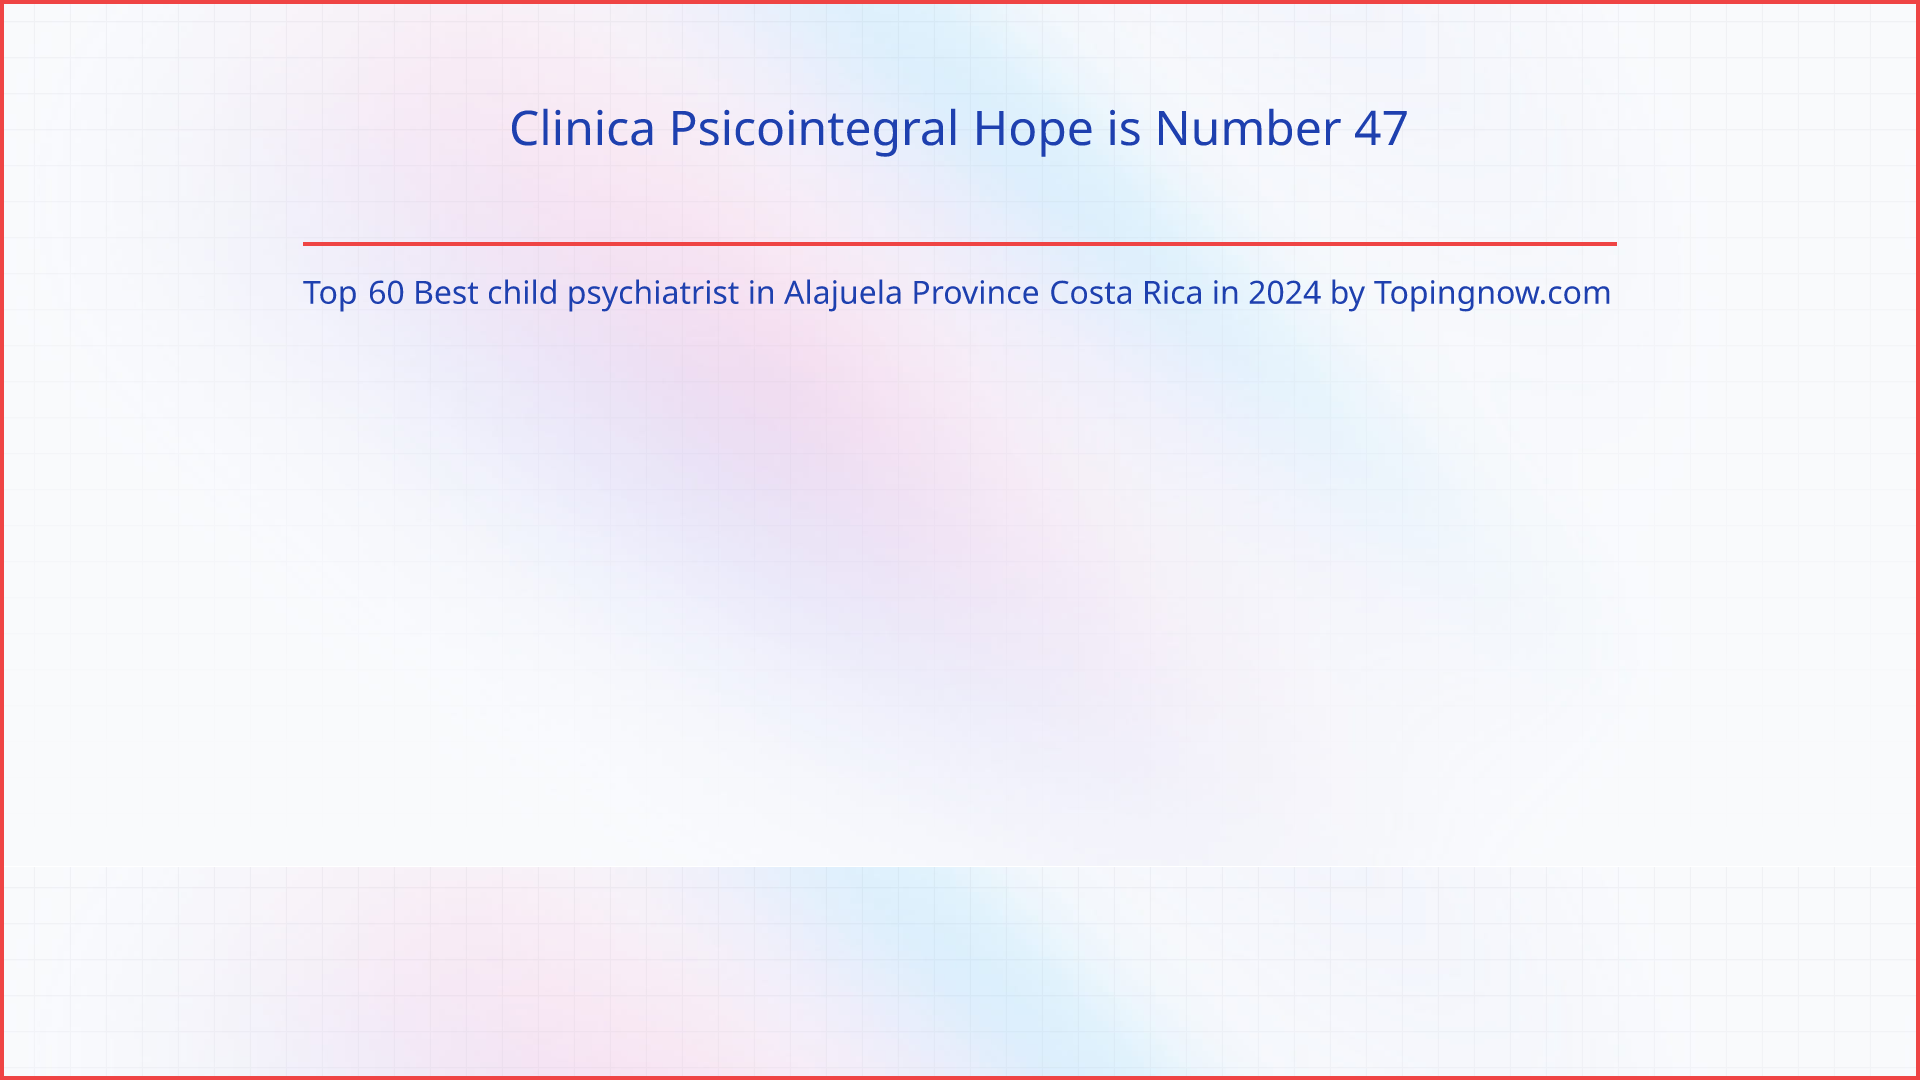 Clinica Psicointegral Hope: Top 60 Best child psychiatrist in Alajuela Province Costa Rica in 2024